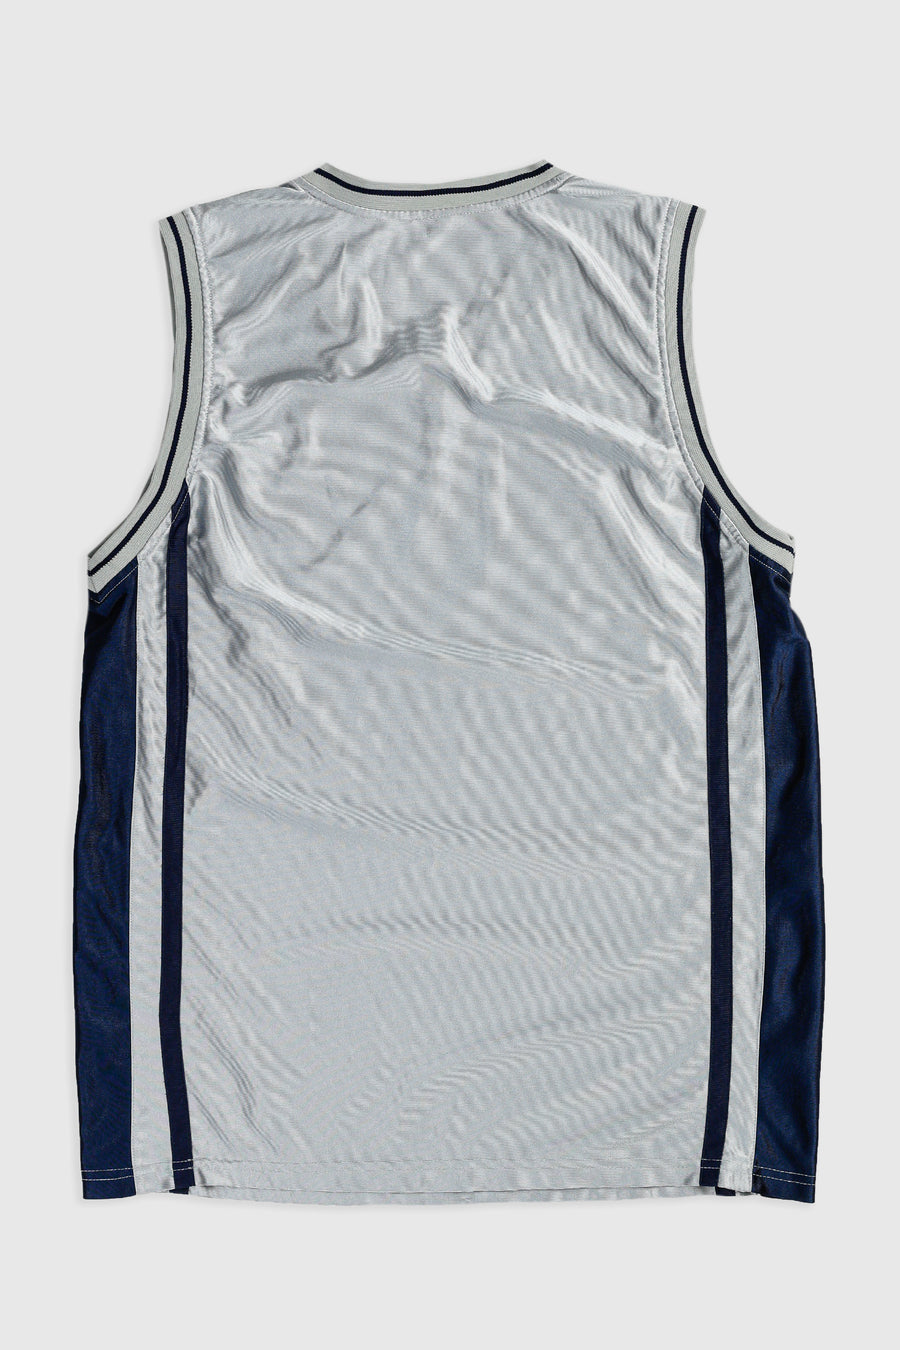 Vintage Basketball Jersey - L